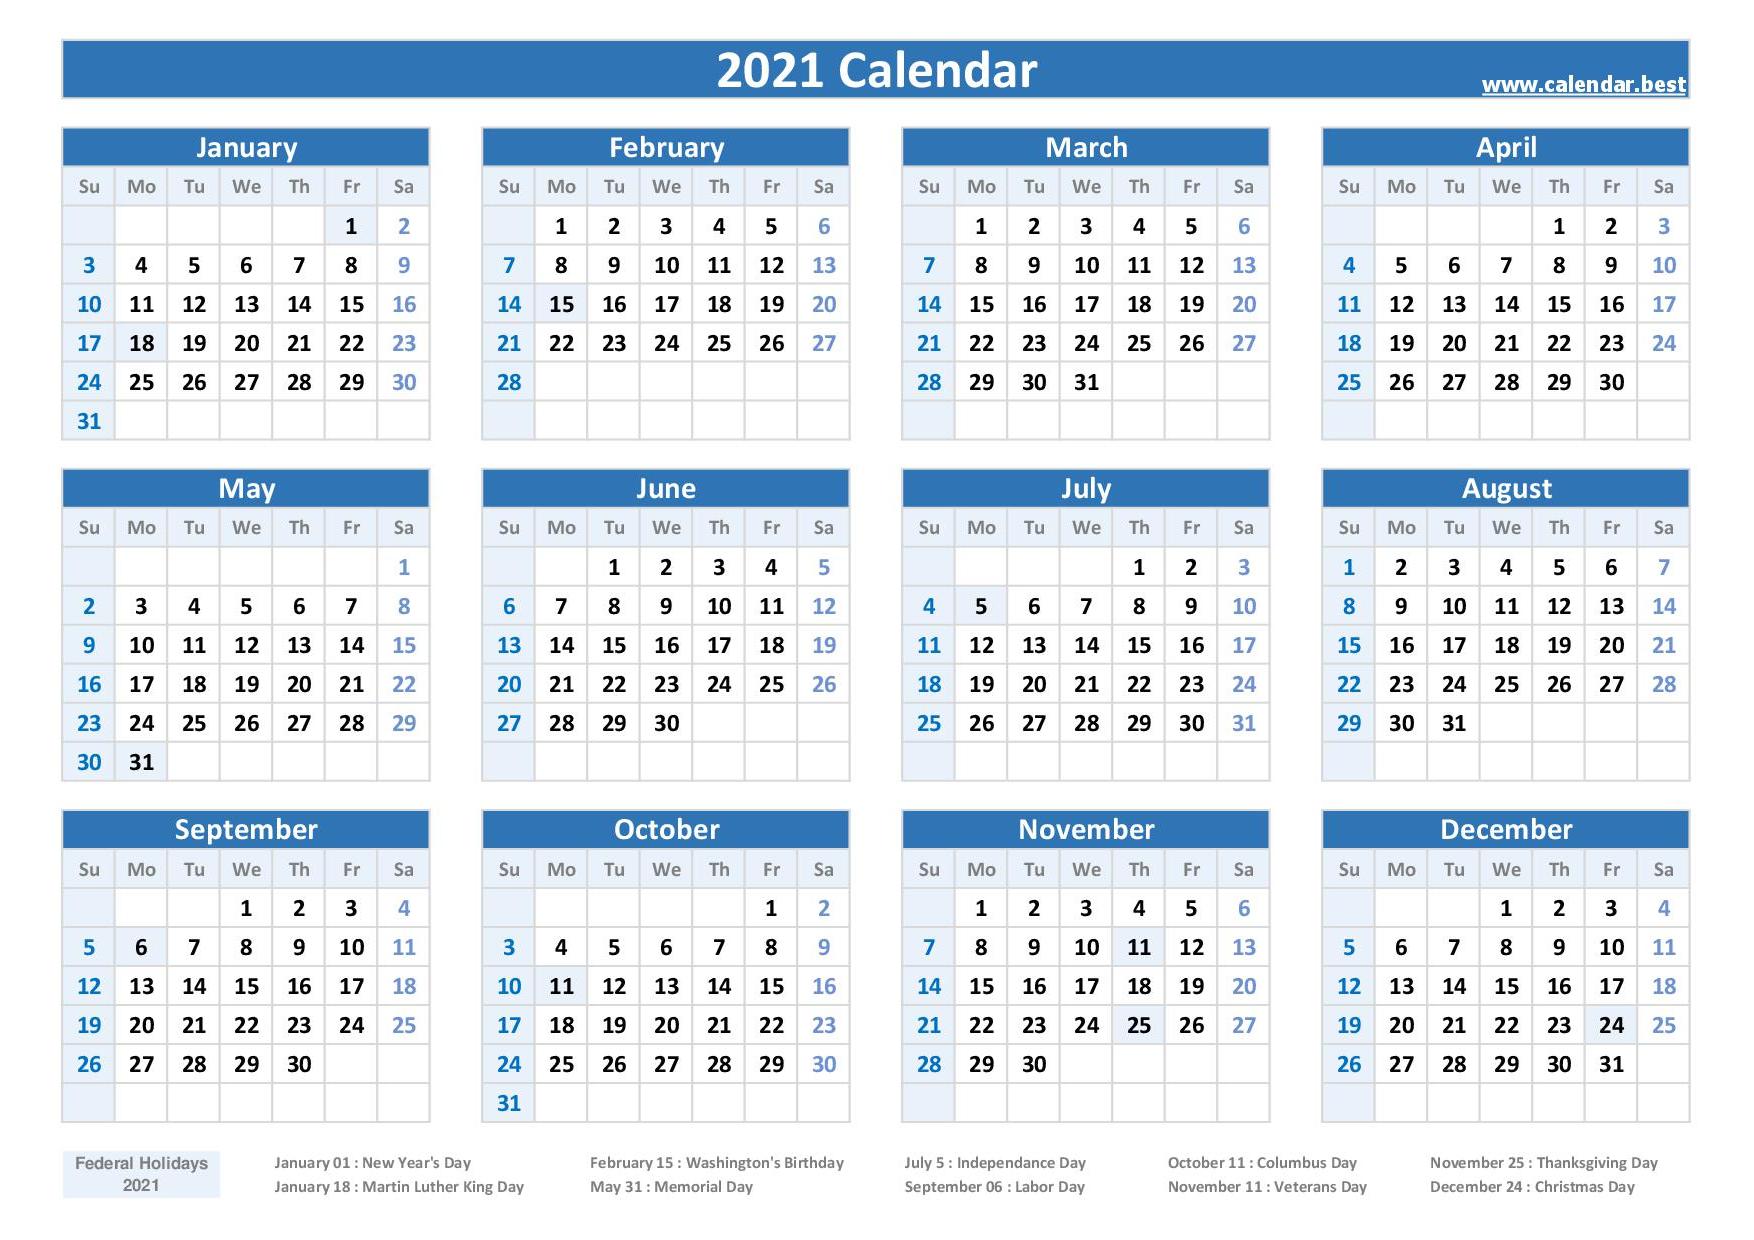 2021 2022 2023 Federal Holidays List And Calendars Calendar Best